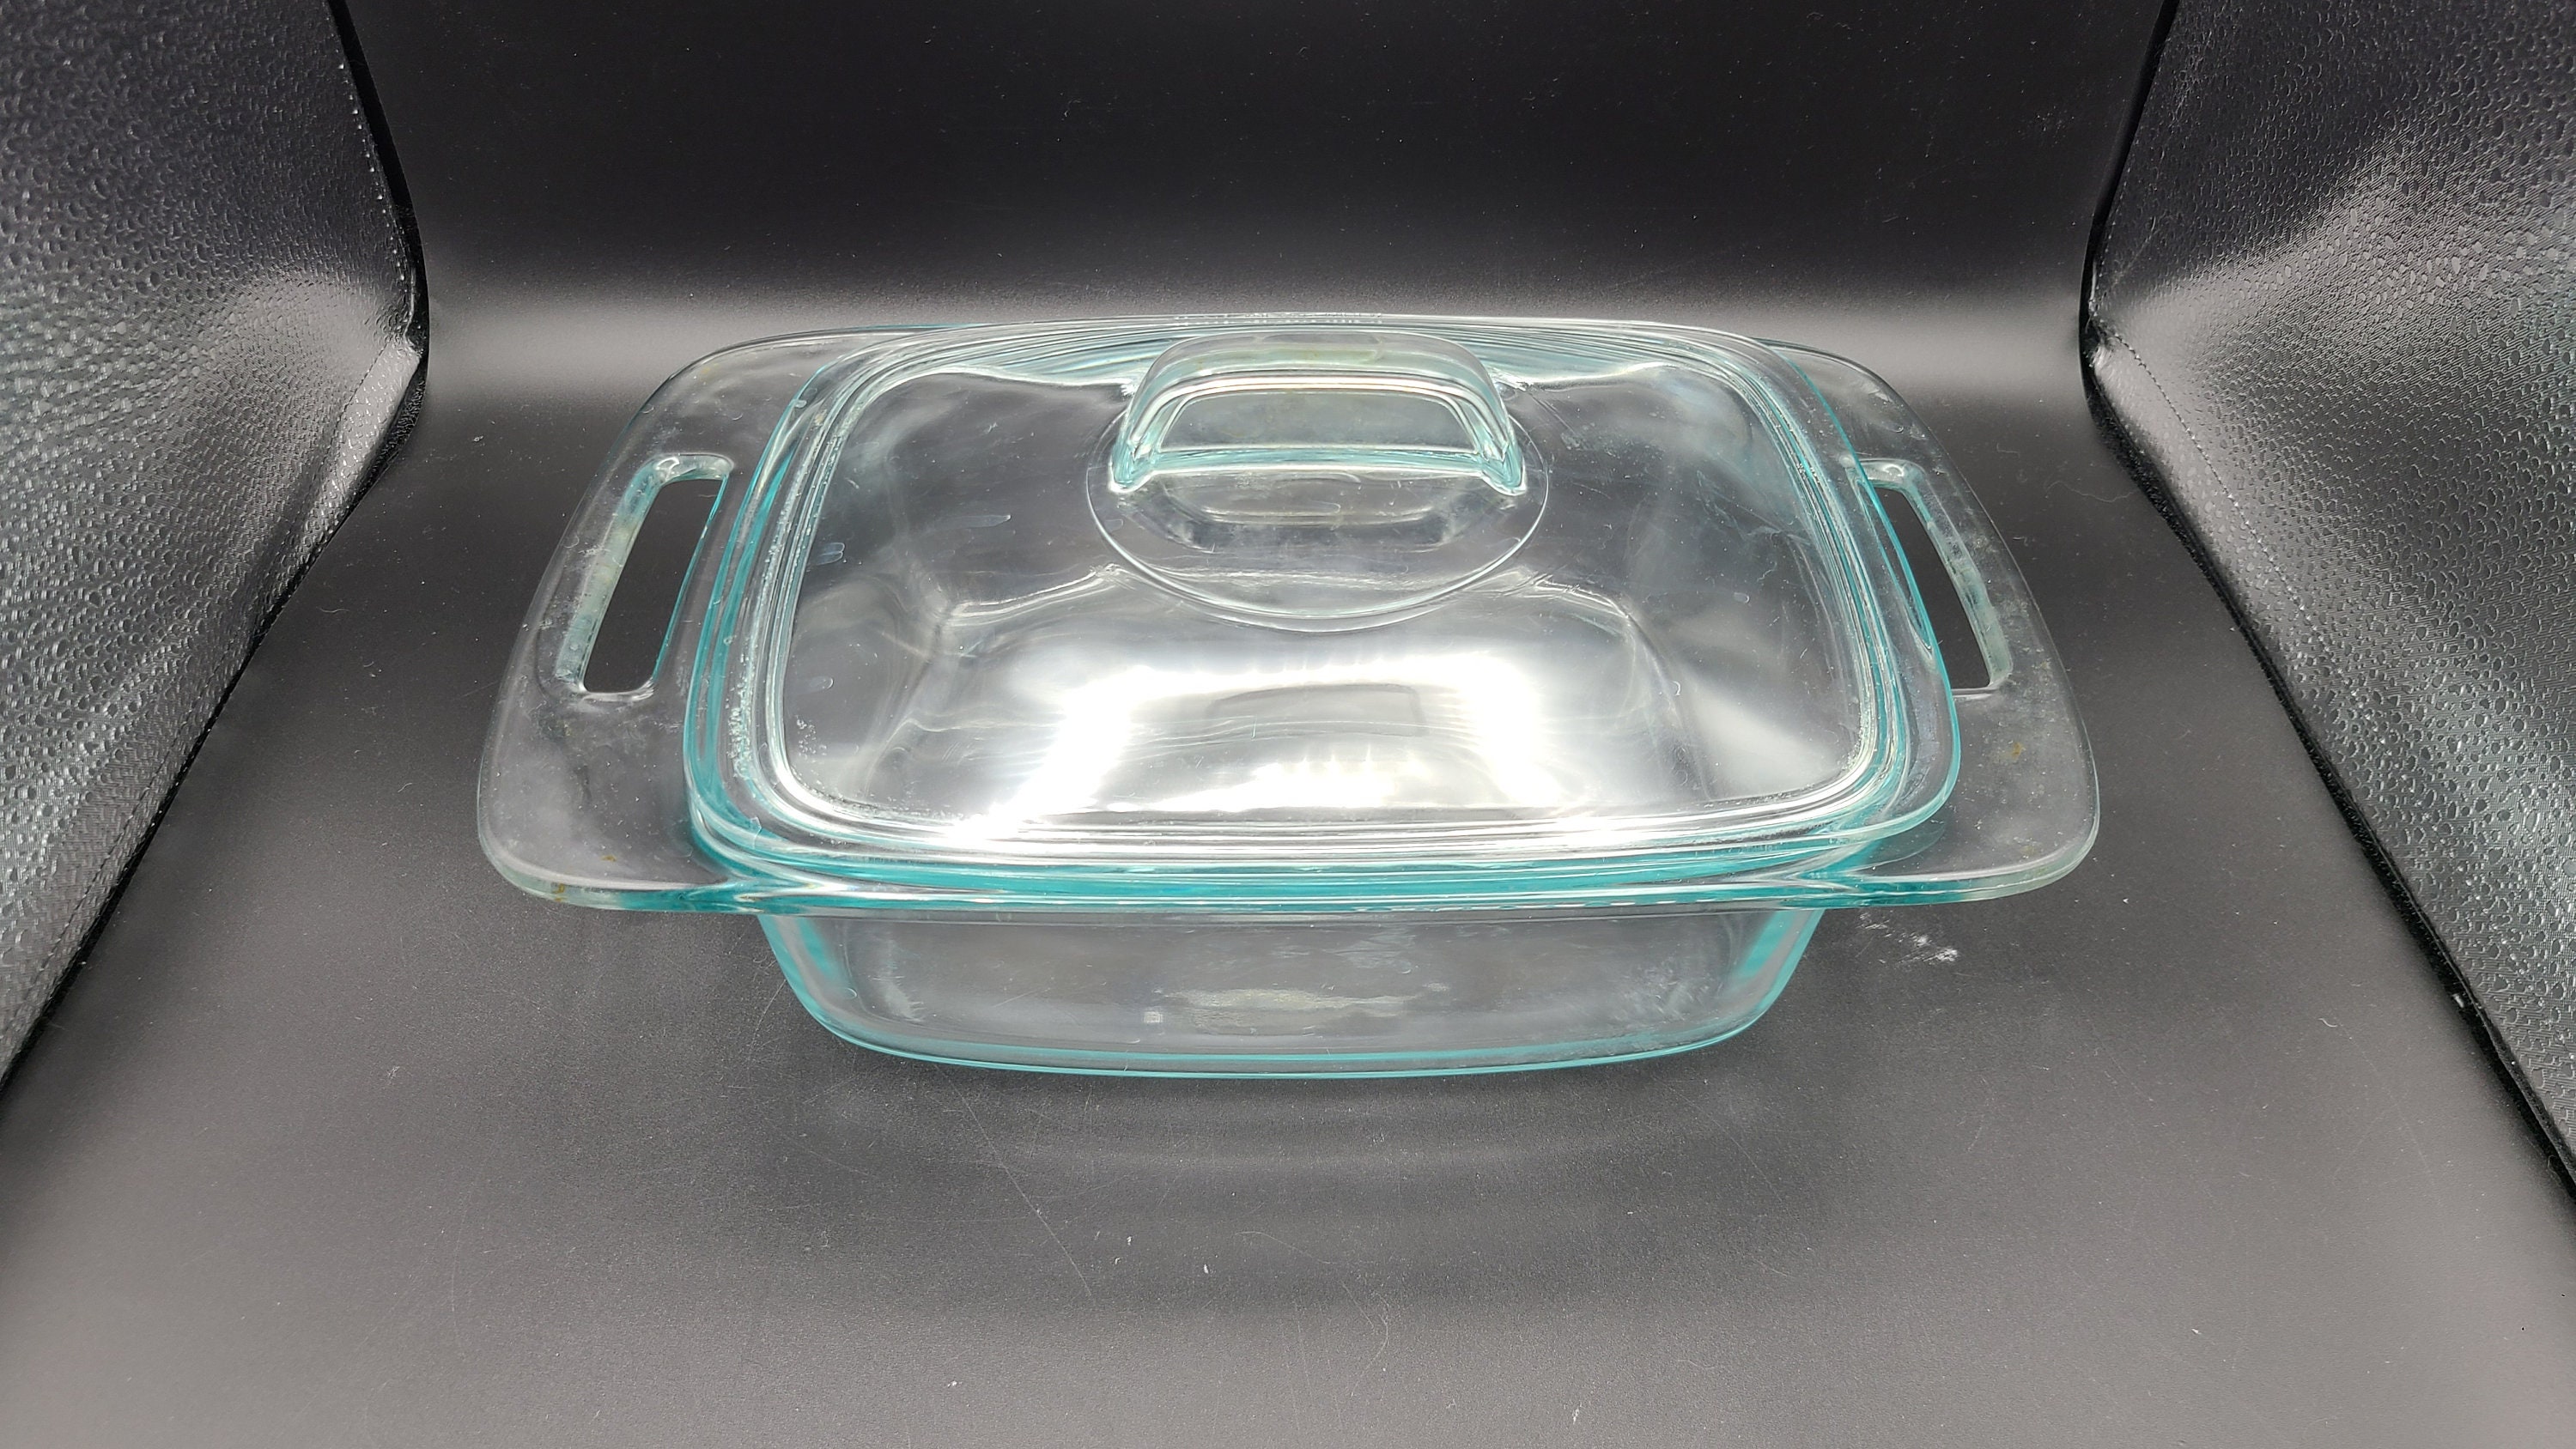 Pyrex Clear Glass 8x8 Baking Dish Pan 2 qt. Casserole W/ Handles & Blue  Cover